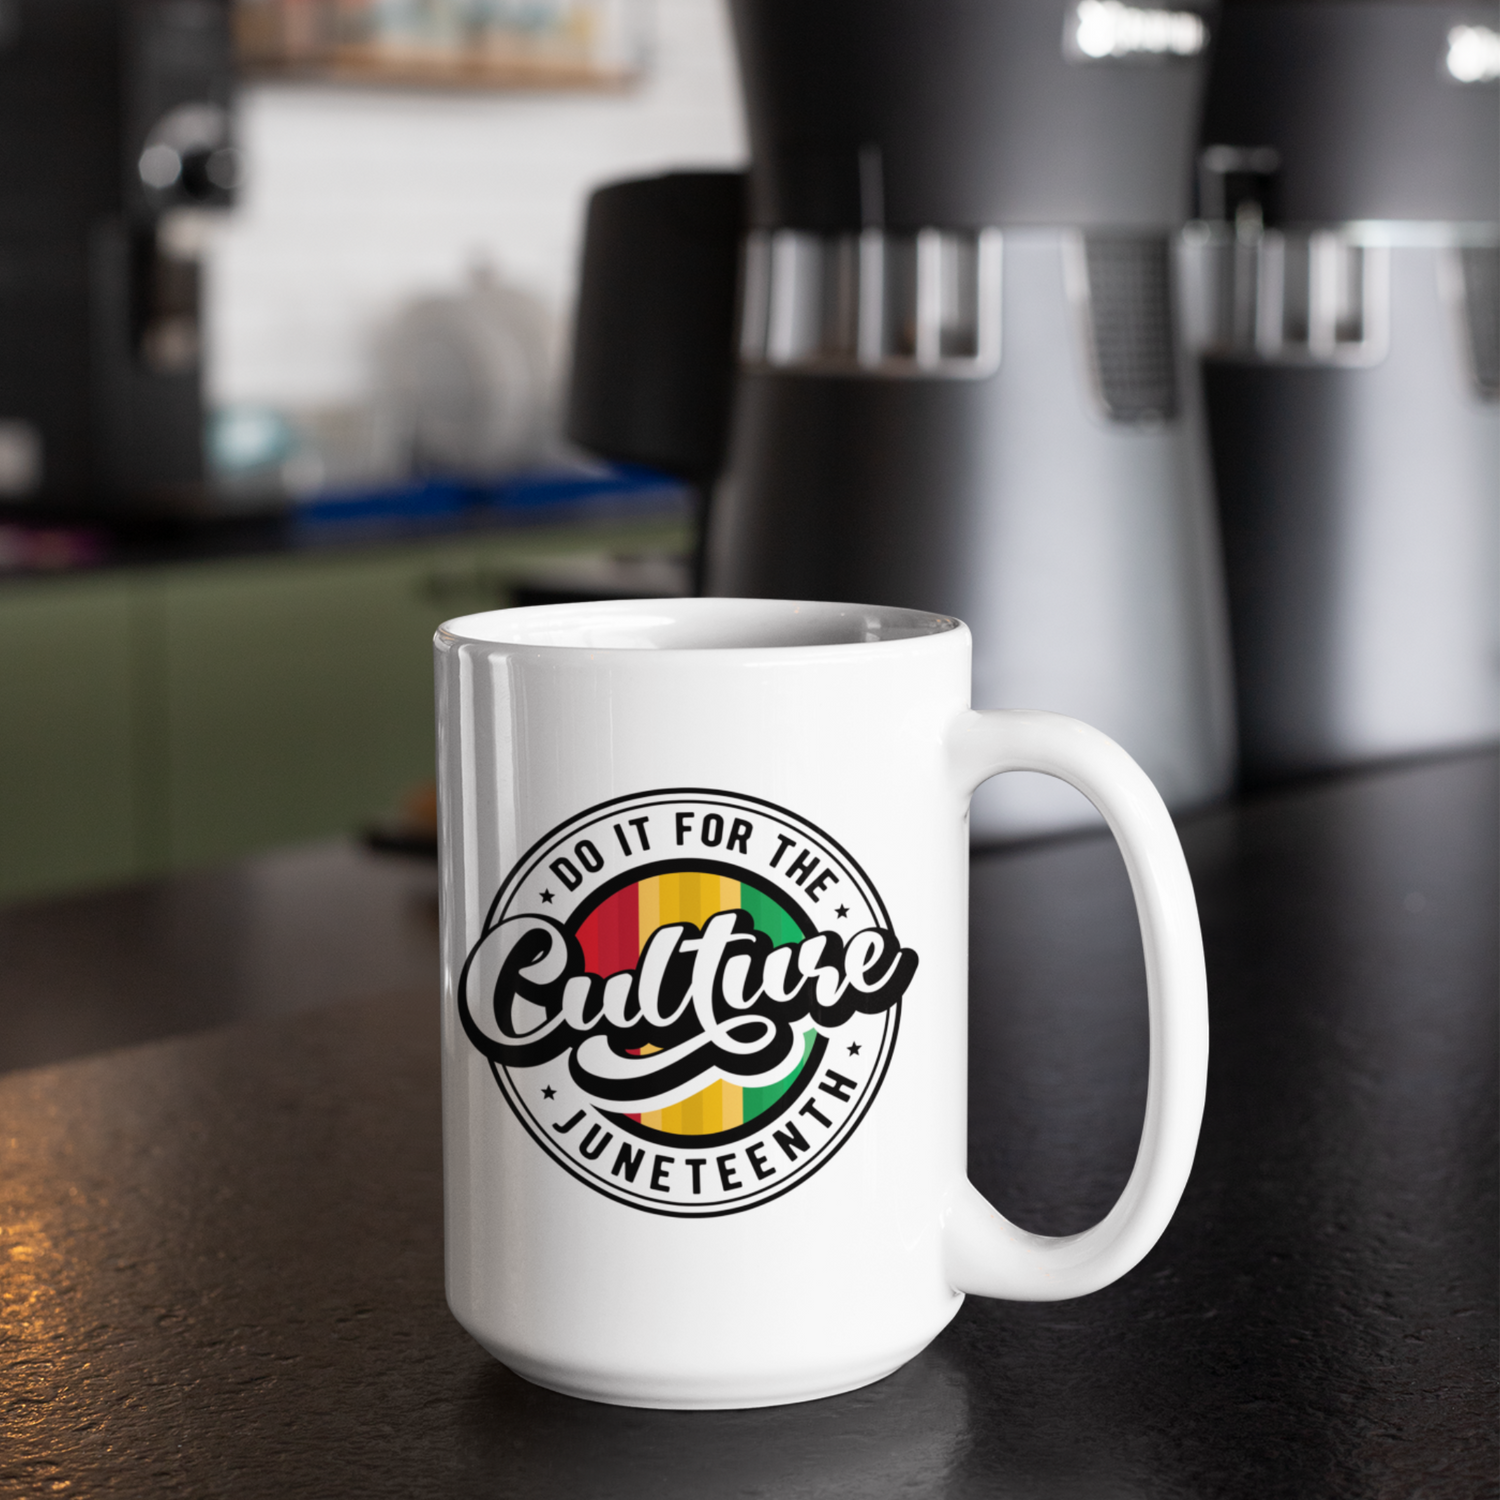 Football themed Coffee mugs